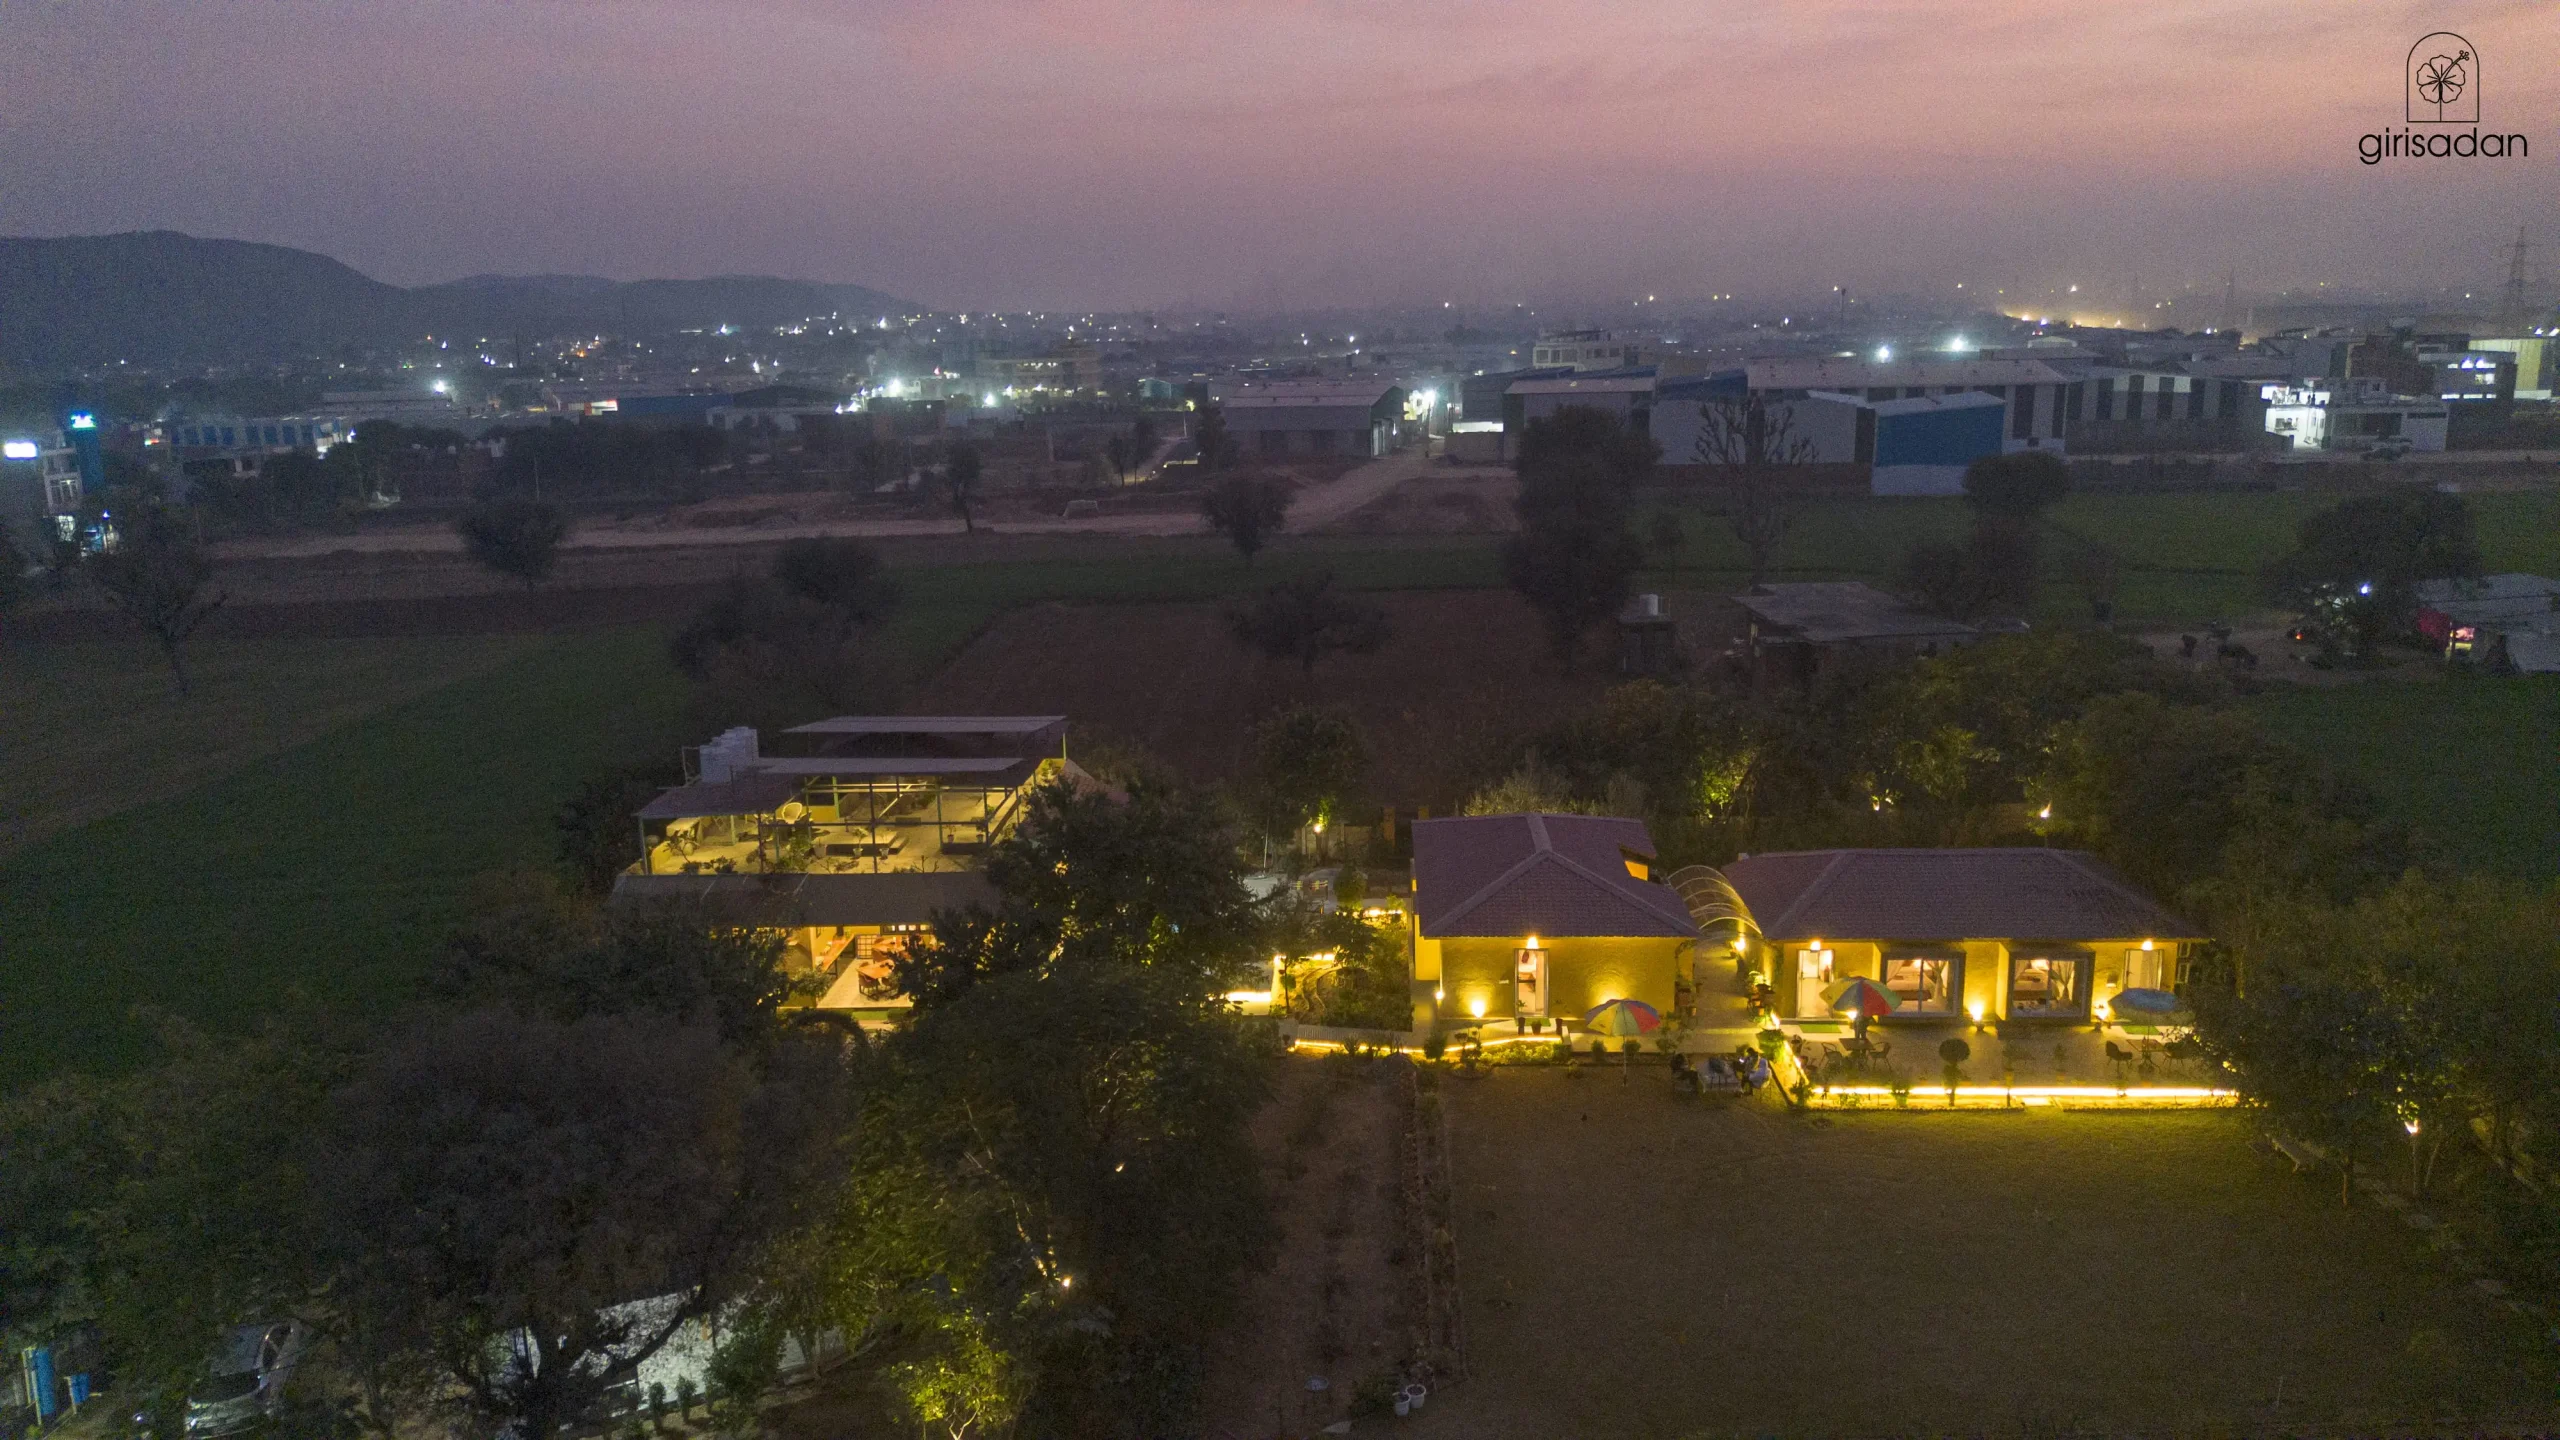 Girisadan Farmstay in Jaipur- Drone view in night